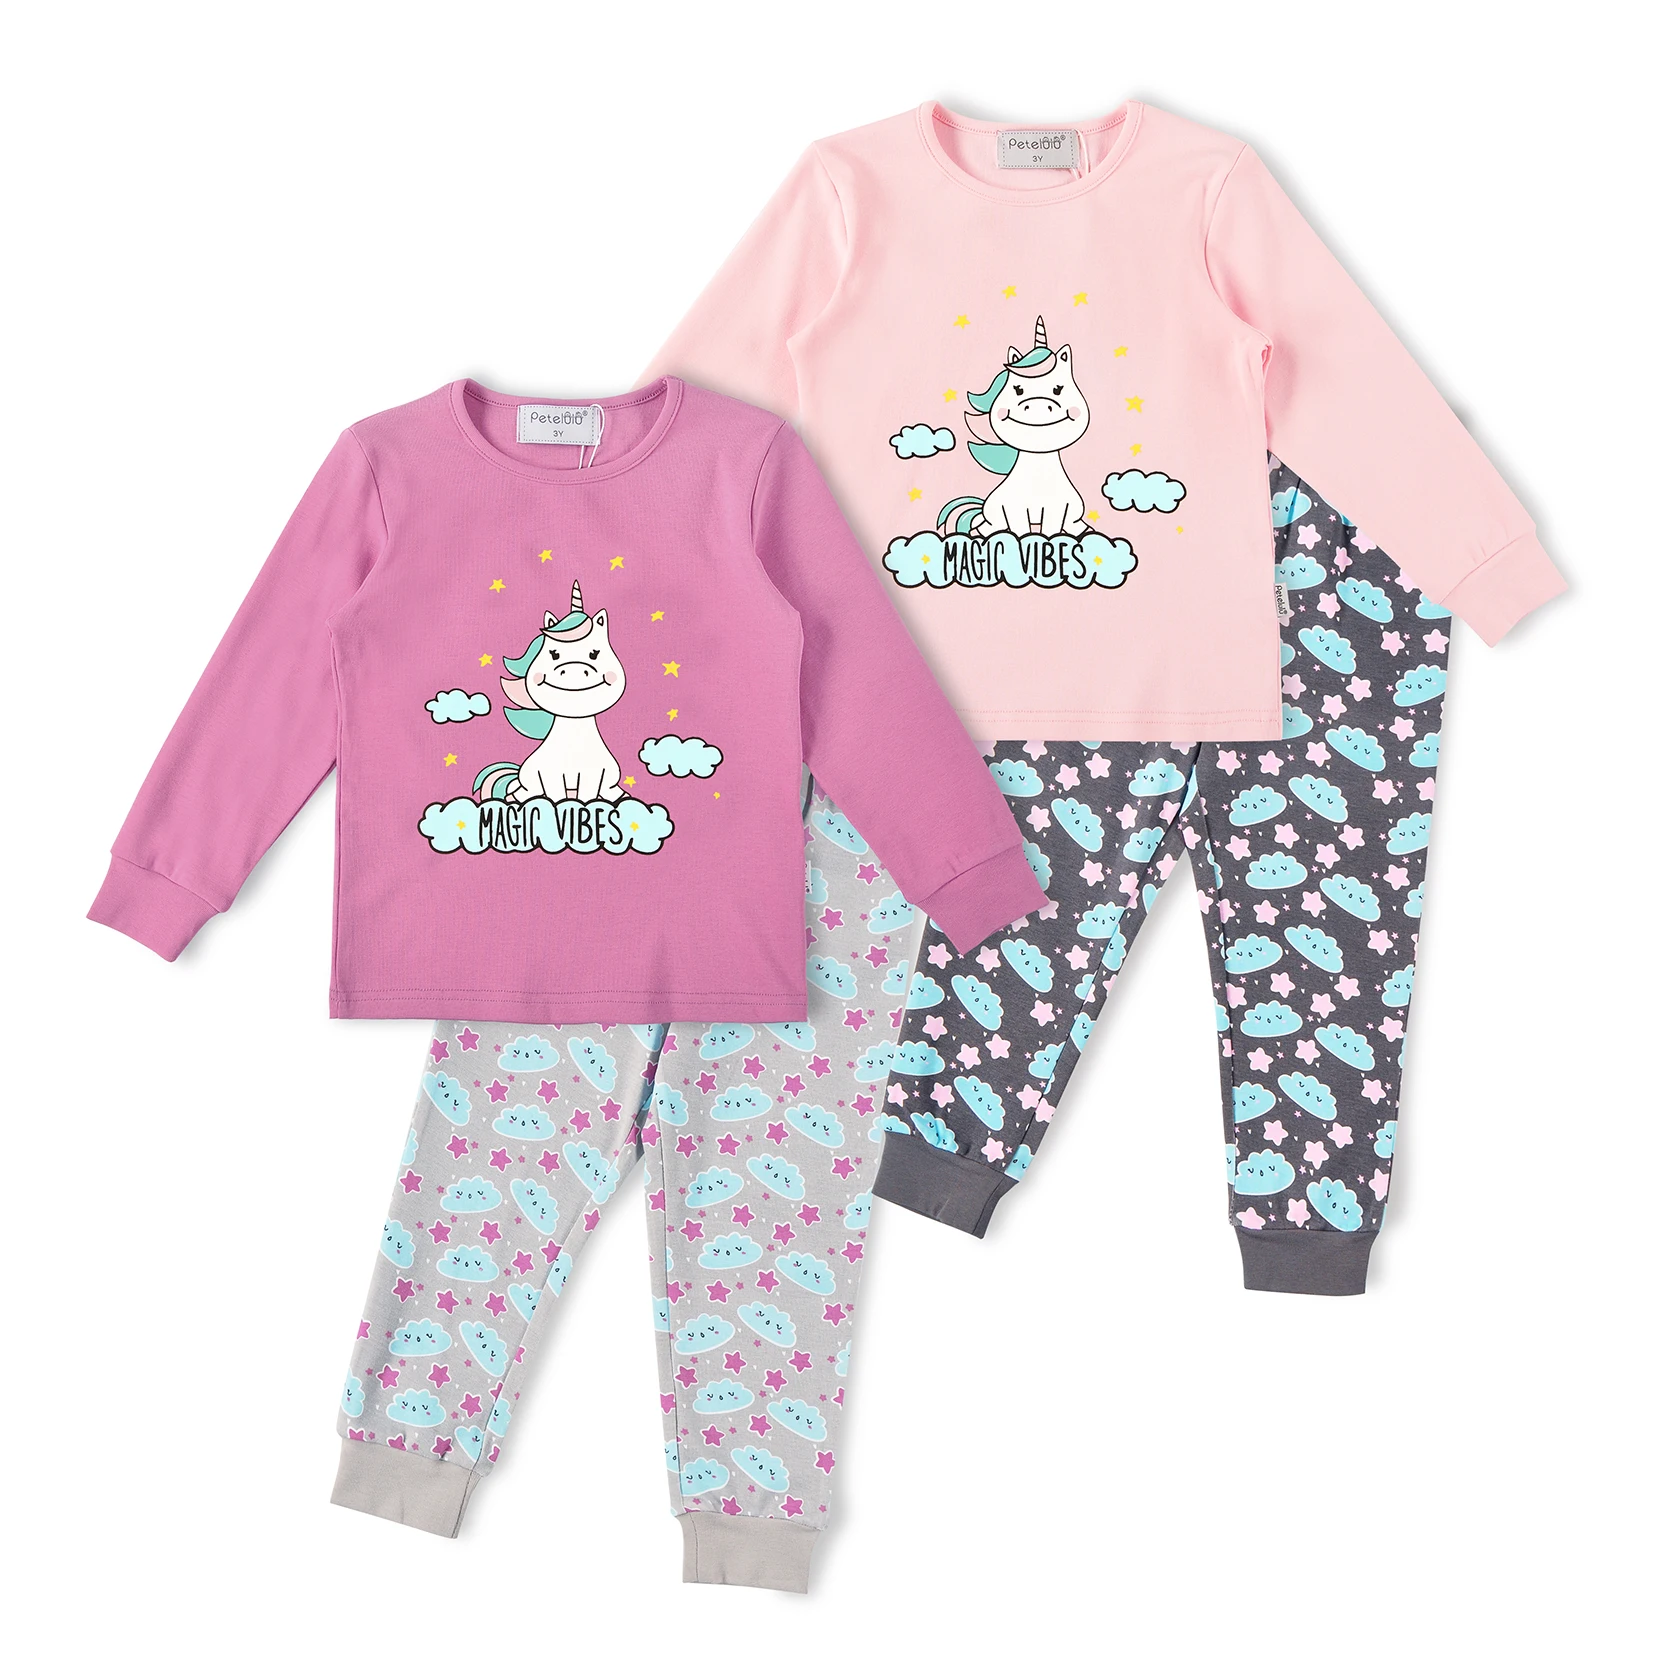 

Girls Pyjamas Set Cute Kids Long Sleeve Cotton Pjs Pajama Sleepwear Tops Shirts & Pants Nightwear Children Clothing